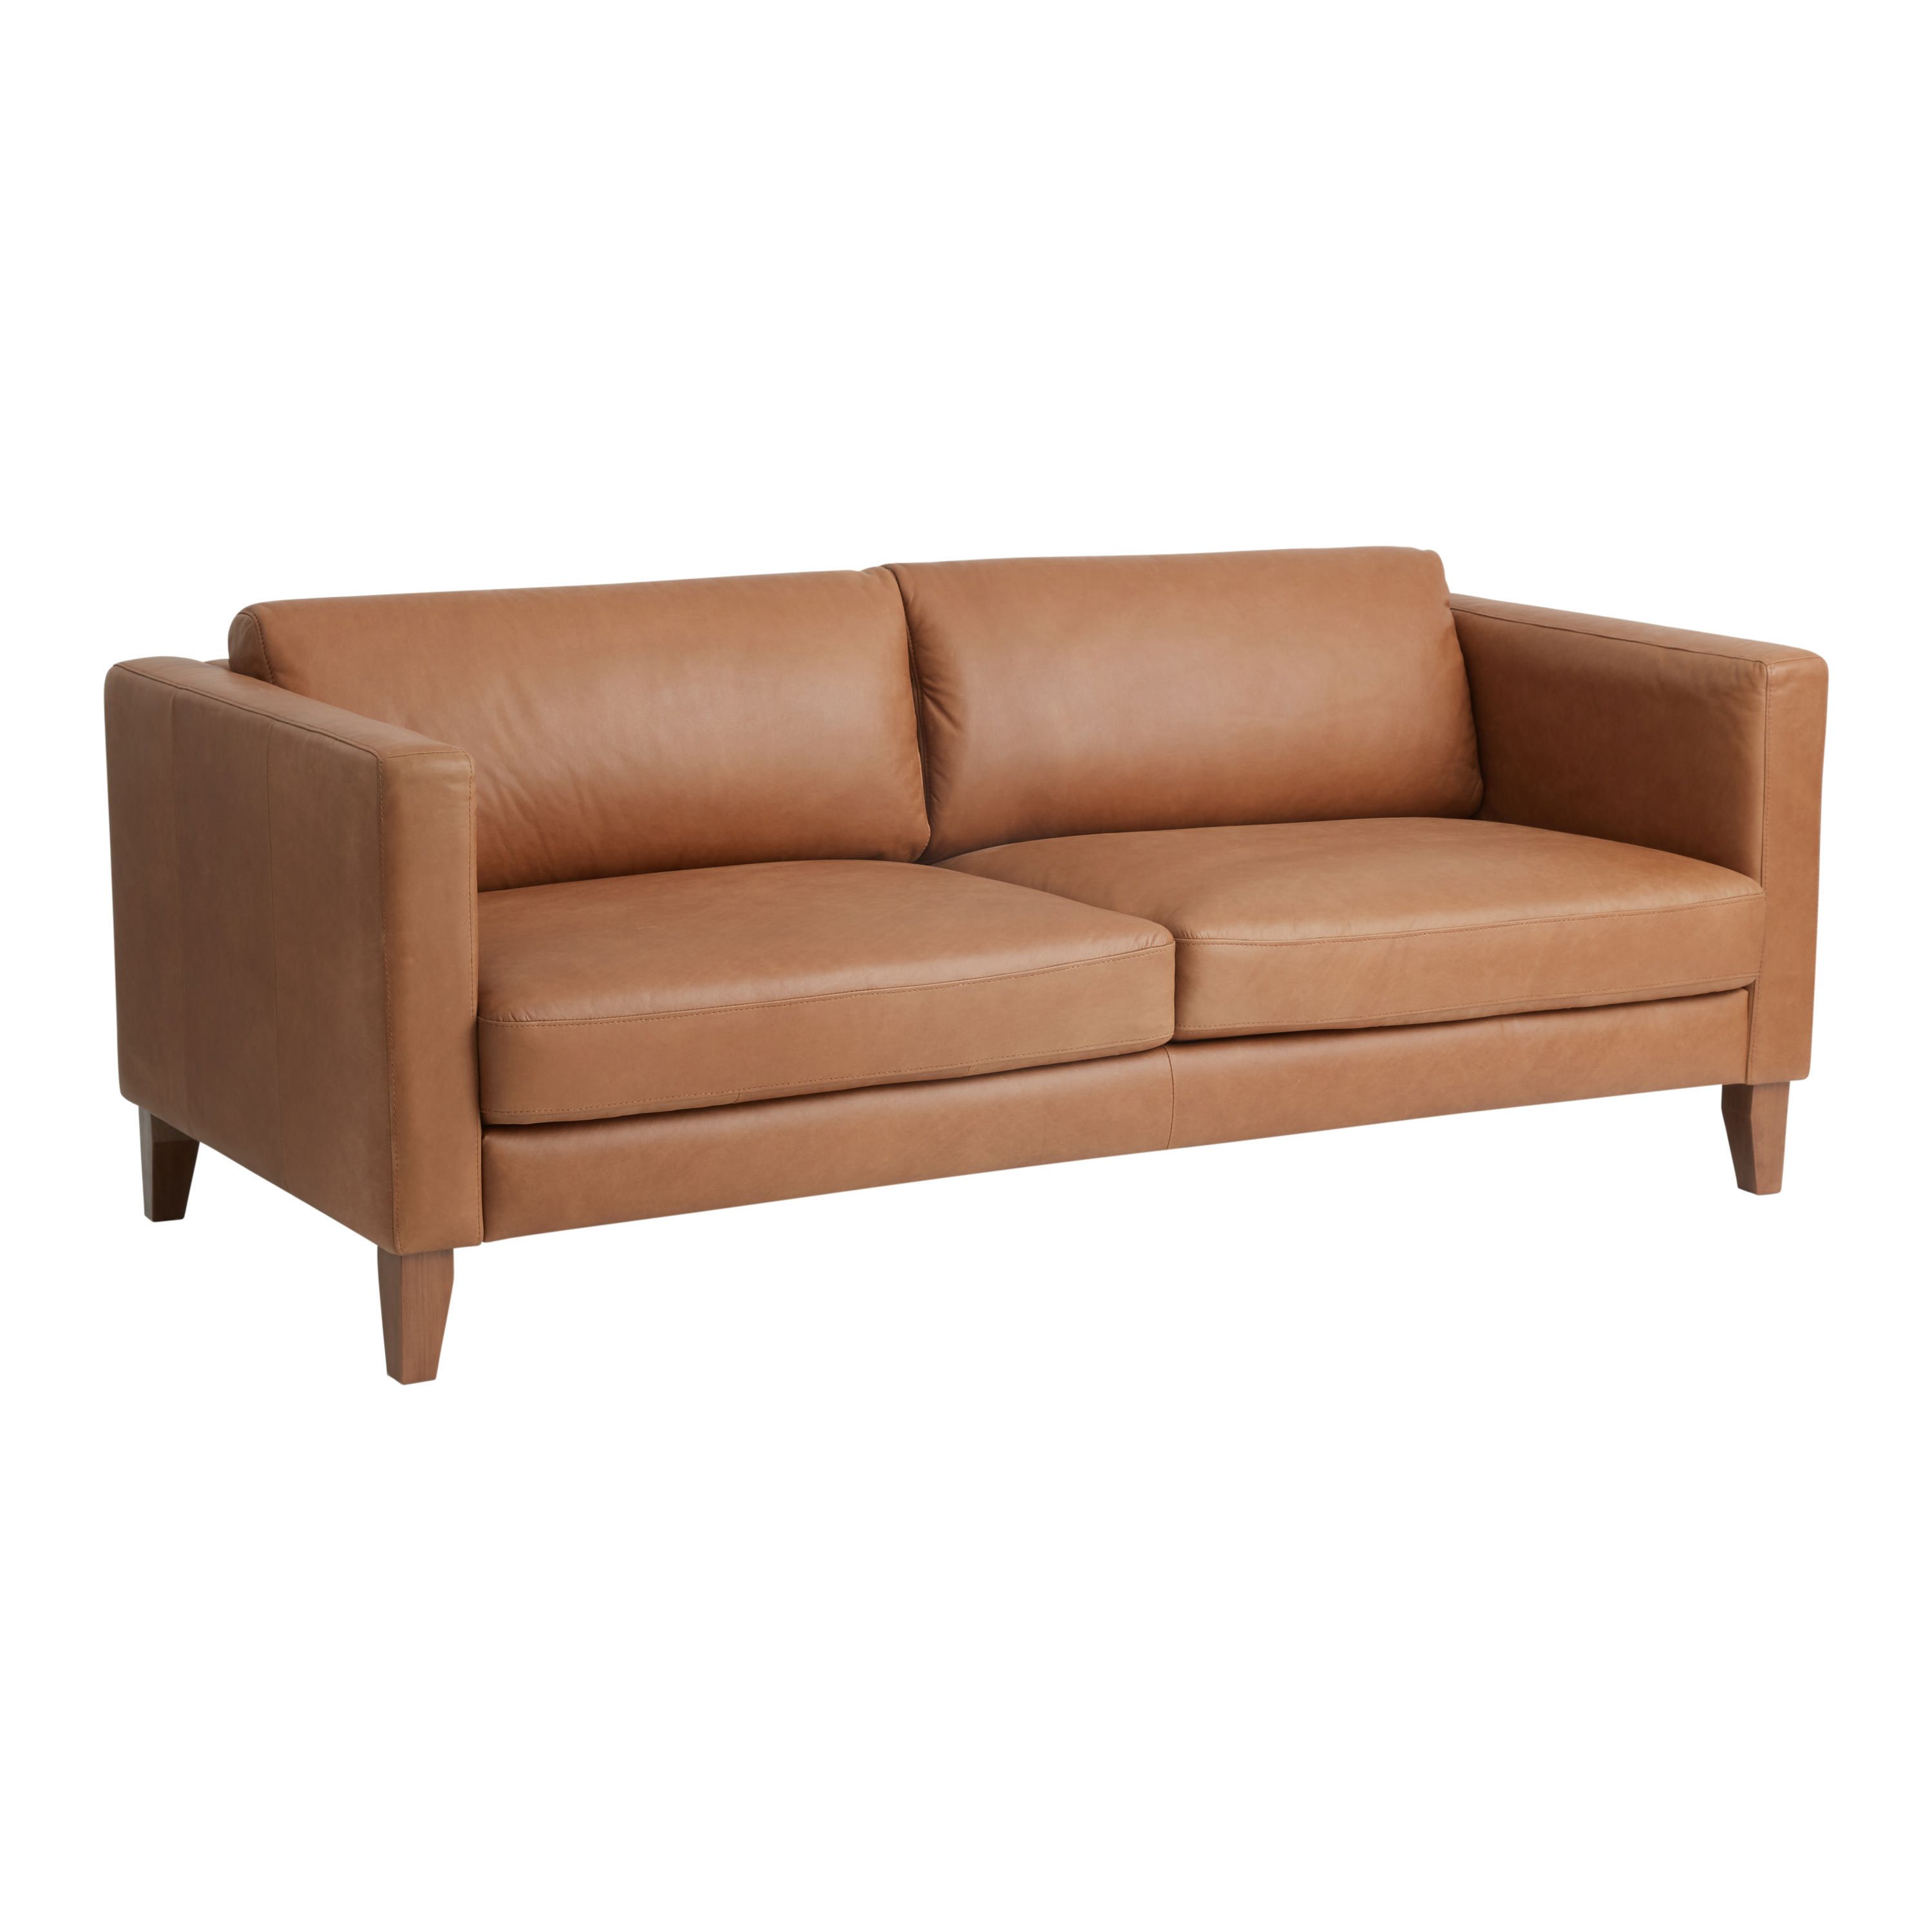 Abrie Vintage Tan Leather Sofa | World Market